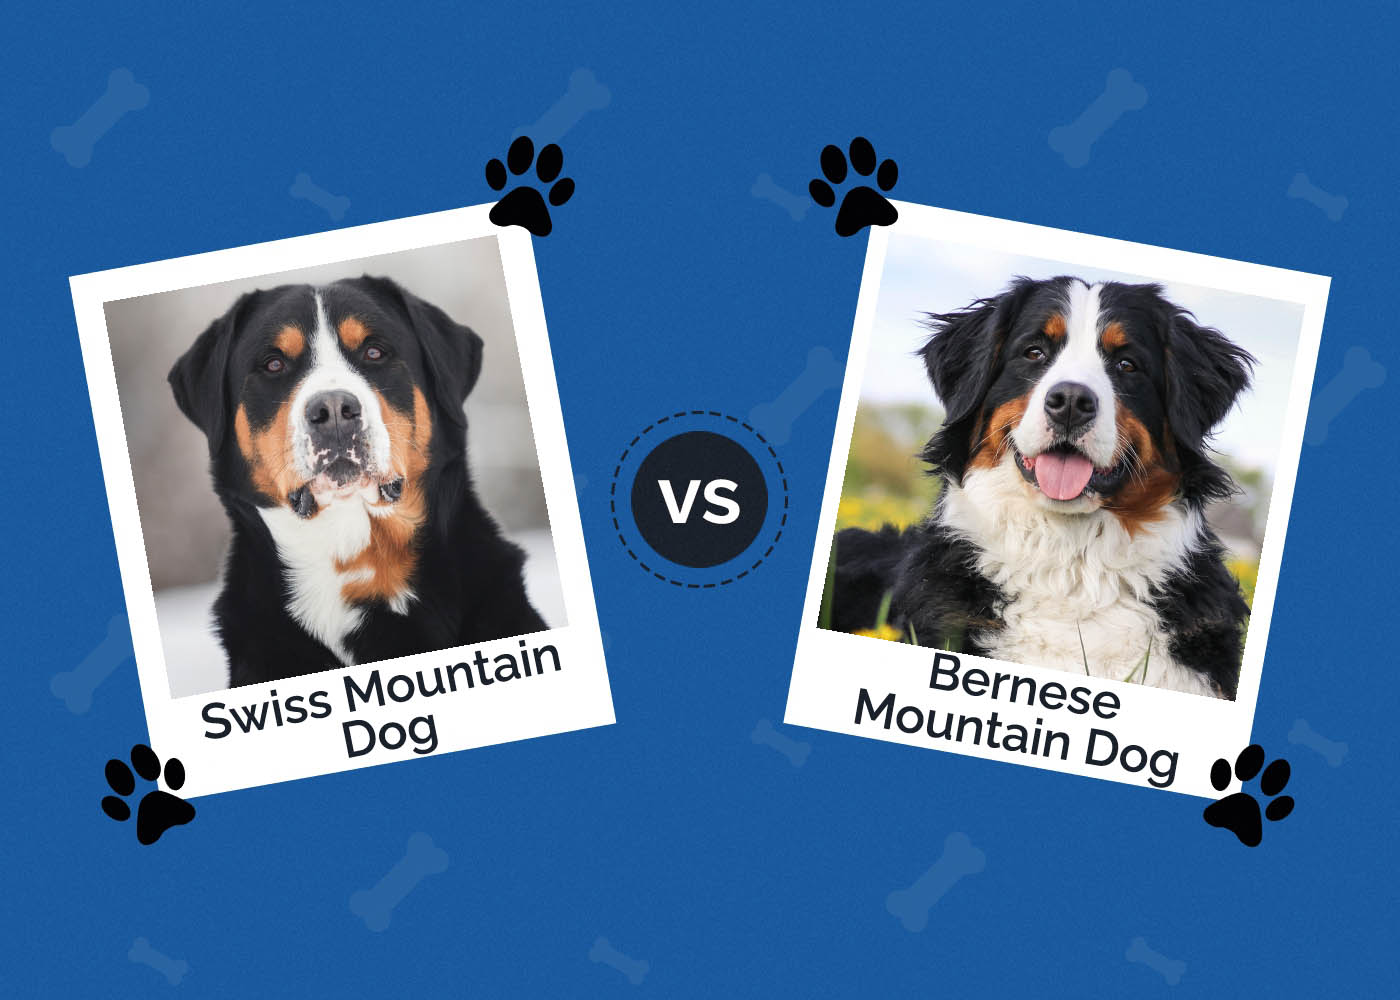 Swiss Mountain Dog vs Bernese Mountain Dog